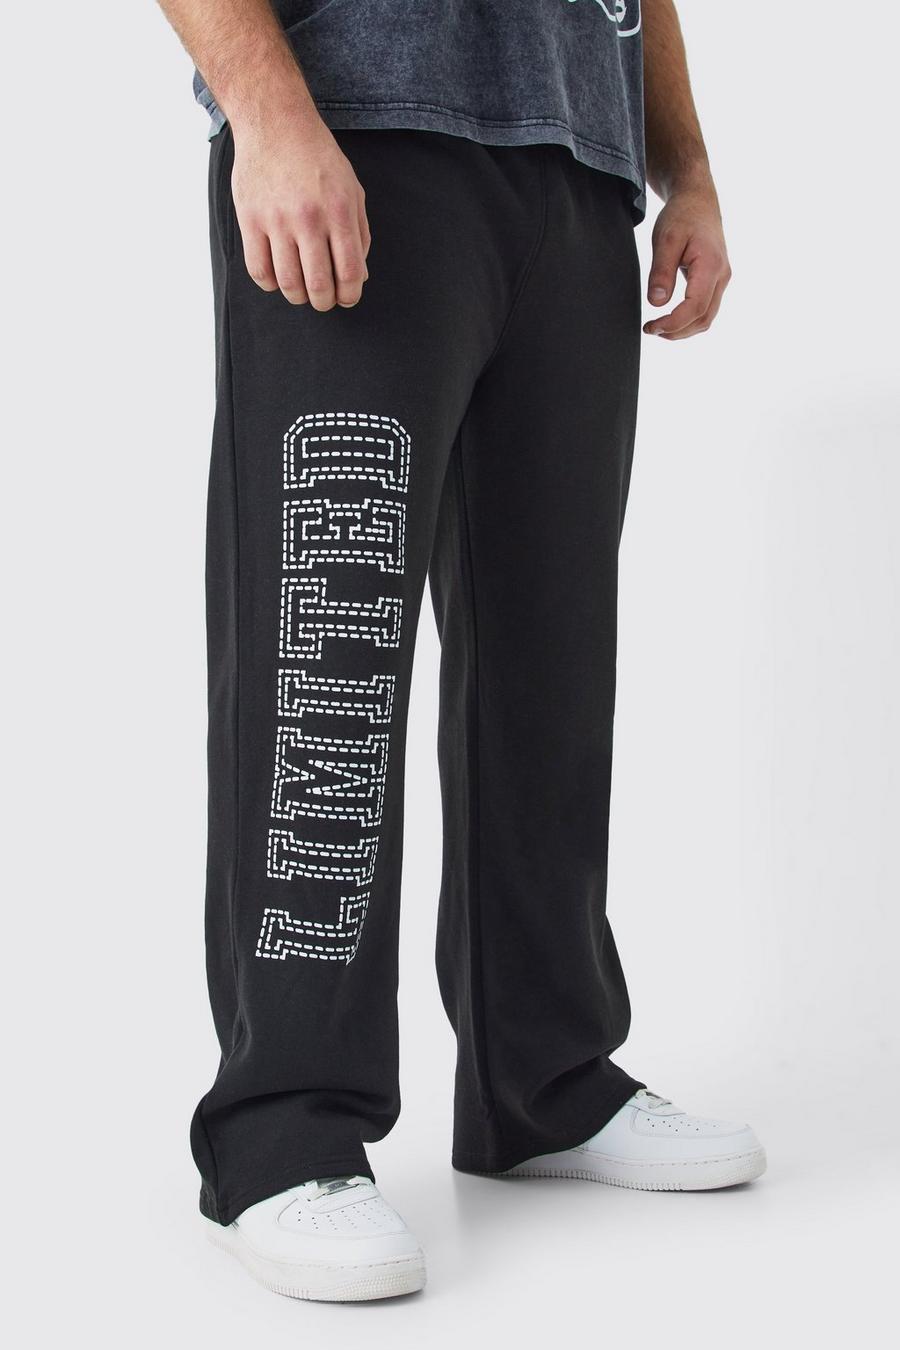 Pantalón deportivo Plus oversize negro Limited, Black